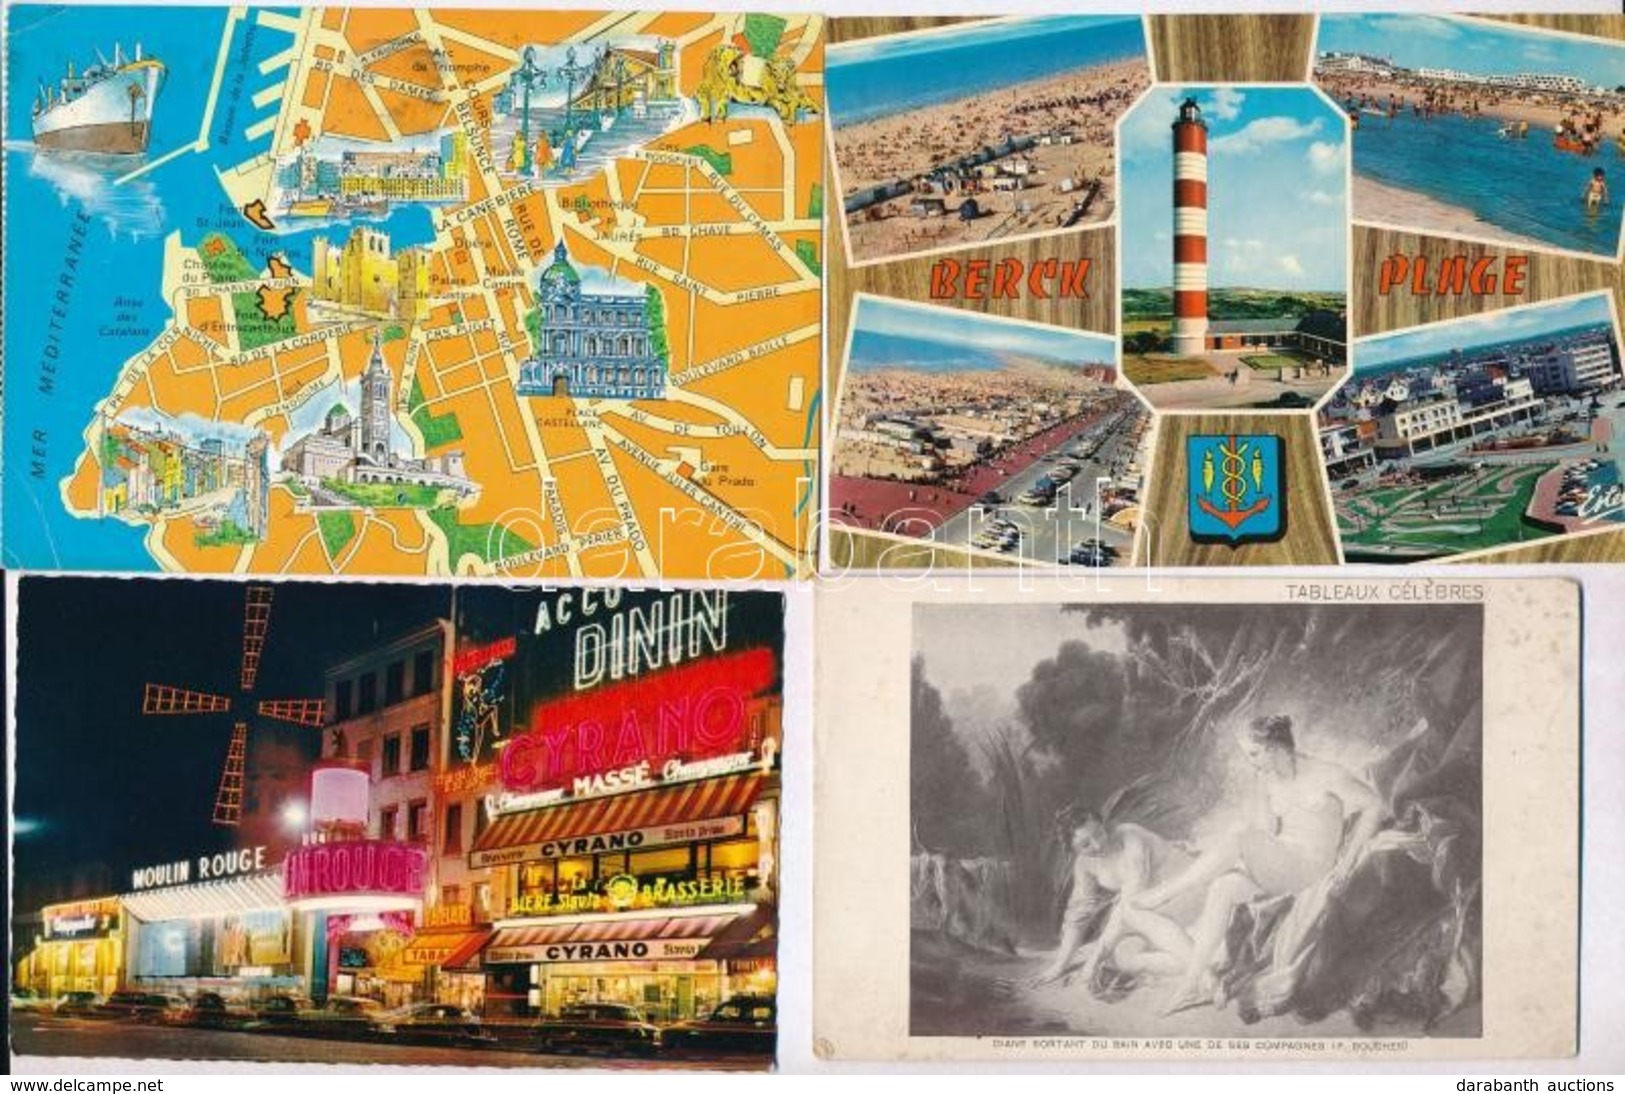 ** * 80 Db MODERN Francia Városképes Lap és Pár Motívumlap / 80 Modern French Town-view Postcards And Some Motives - Unclassified